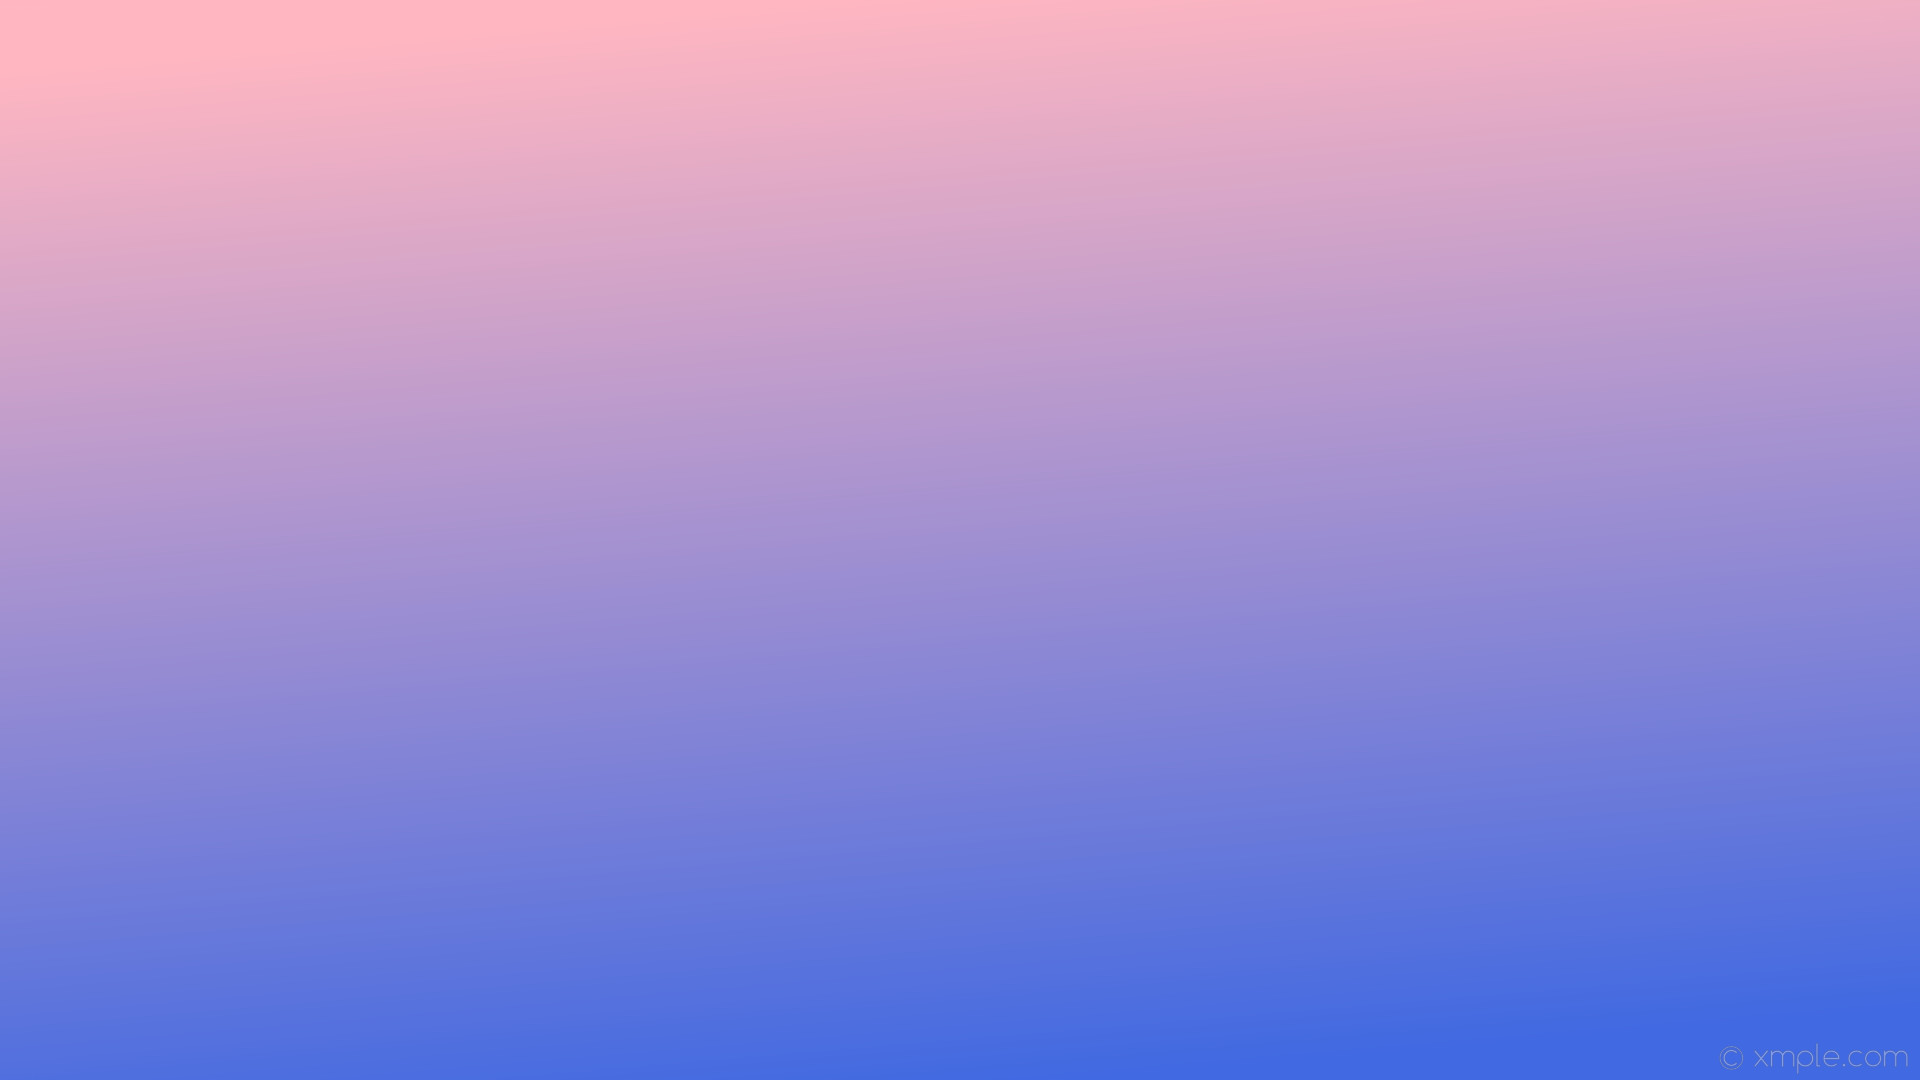 1920x1080 wallpaper pink gradient linear blue royal blue light pink #4169e1 #ffb6c1  285Â°